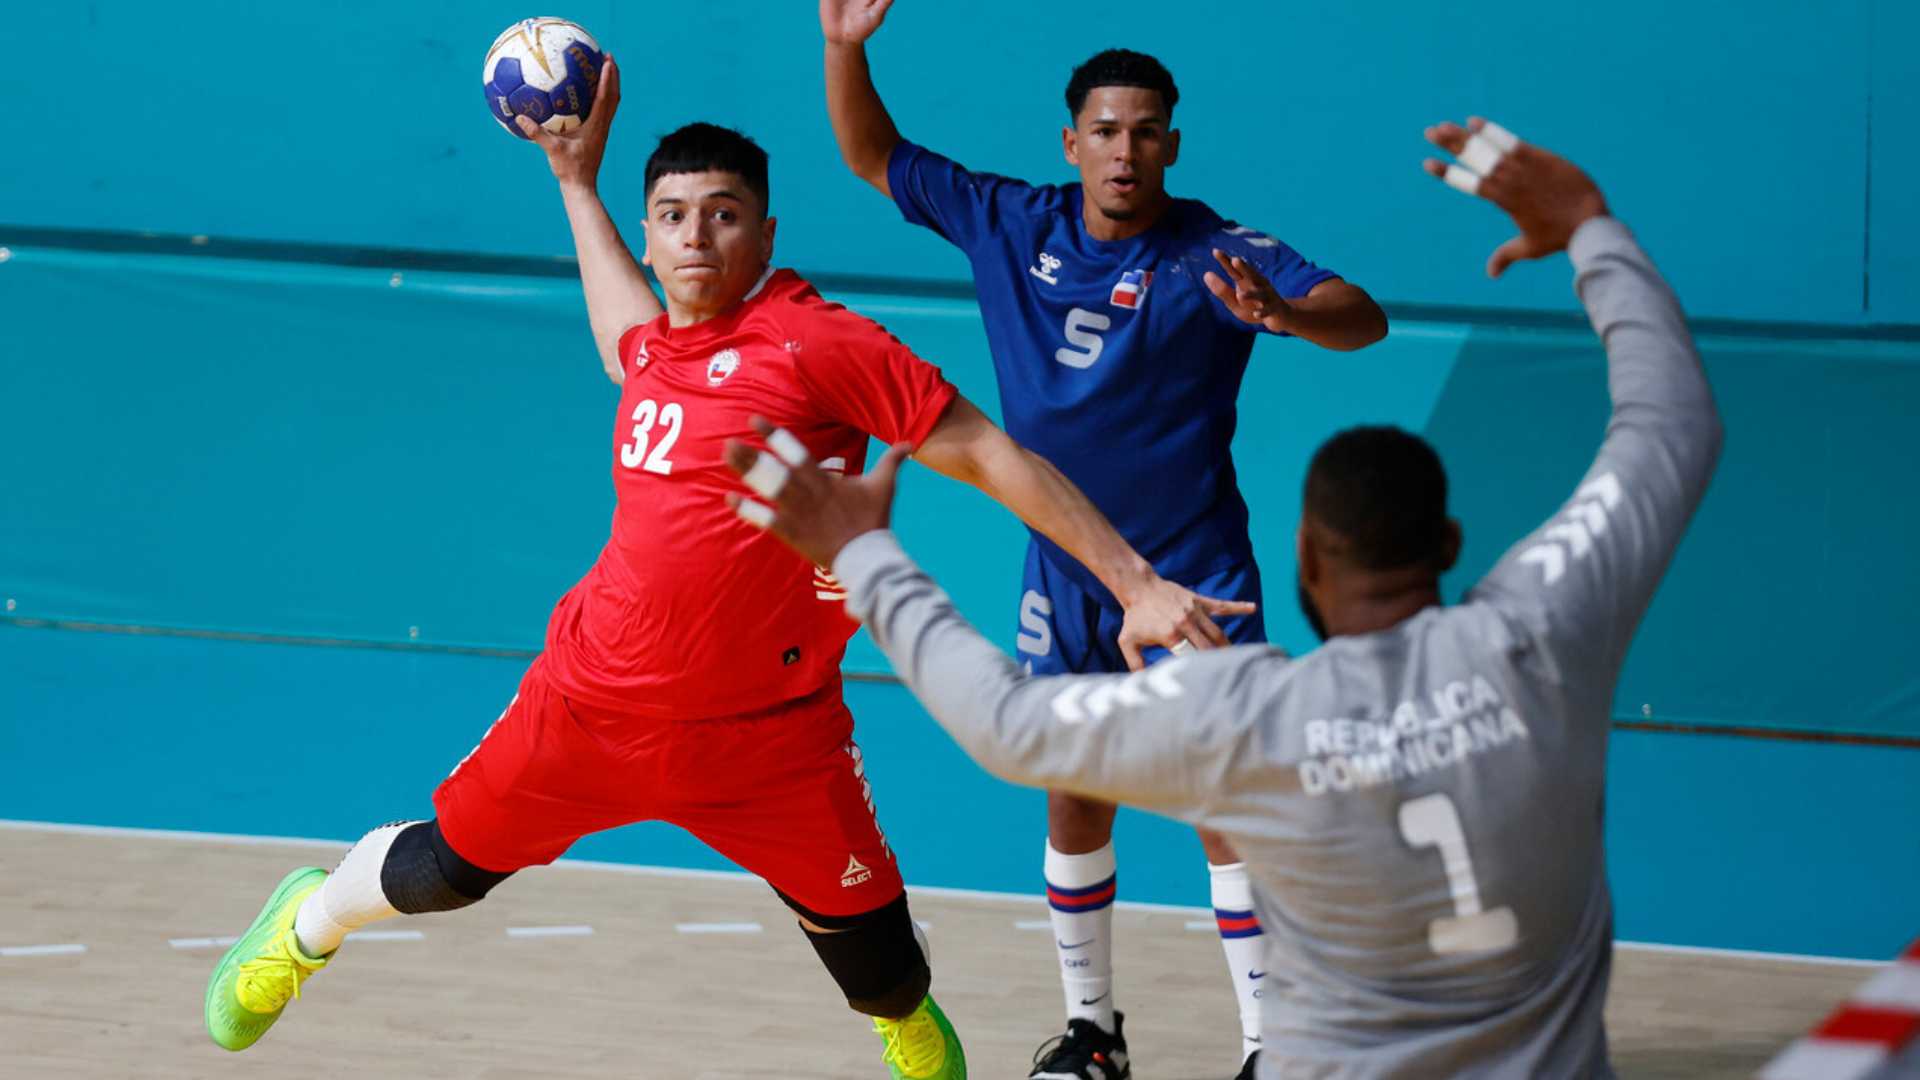 Chile convincingly defeats the Dominican Republic in men's handball